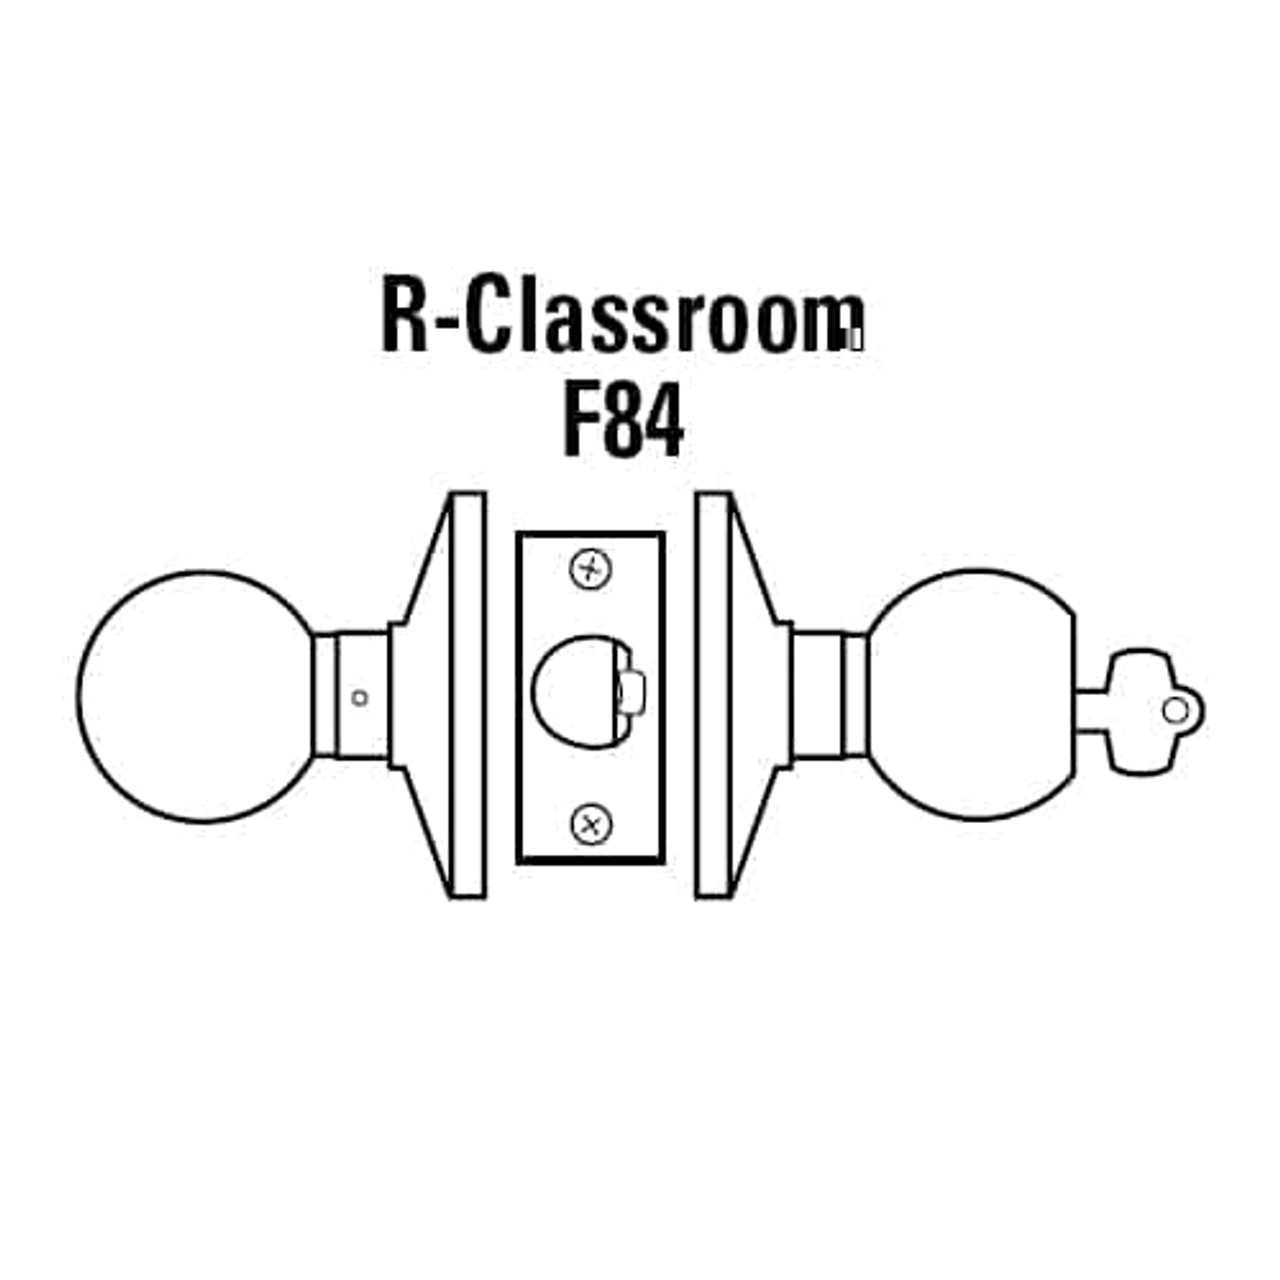 6K37R4DS3605 Best 6K Series Medium Duty Classroom Cylindrical Knob Locks with Round Style in Bright Brass